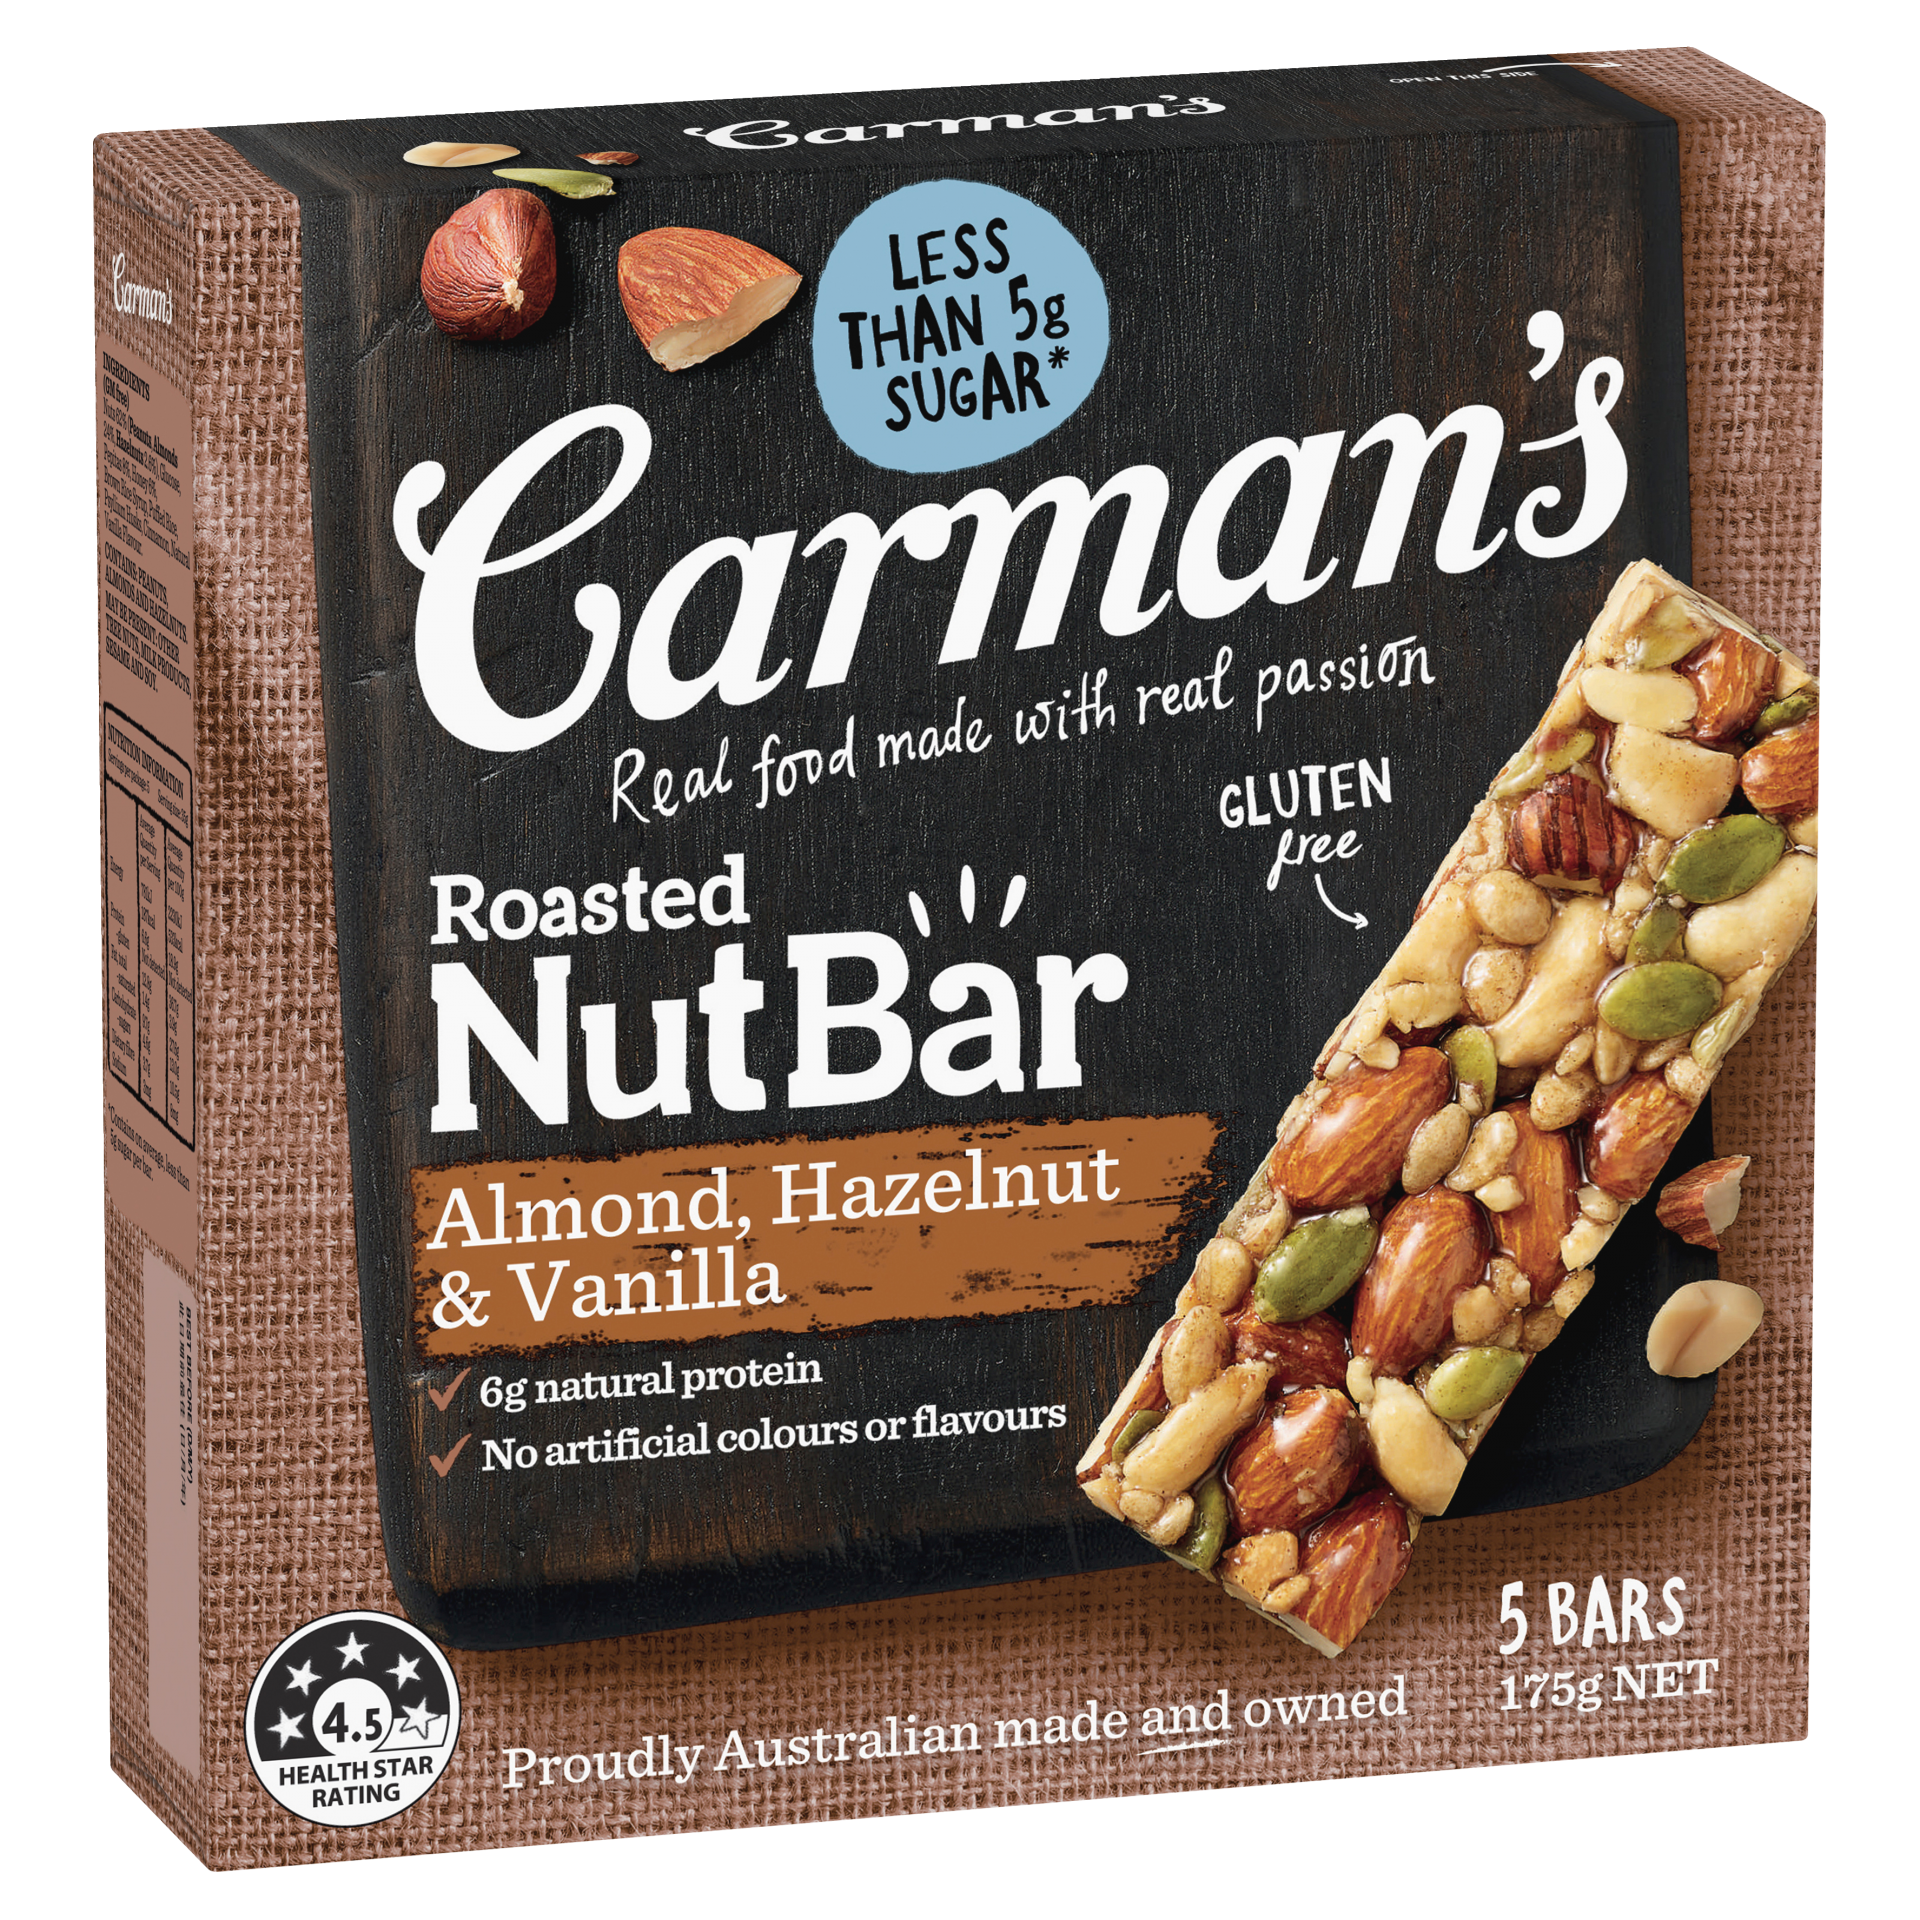 Carman's Gluten Free Nut Bar - Almond Hazelnut & Vanilla Nut Bar 35g